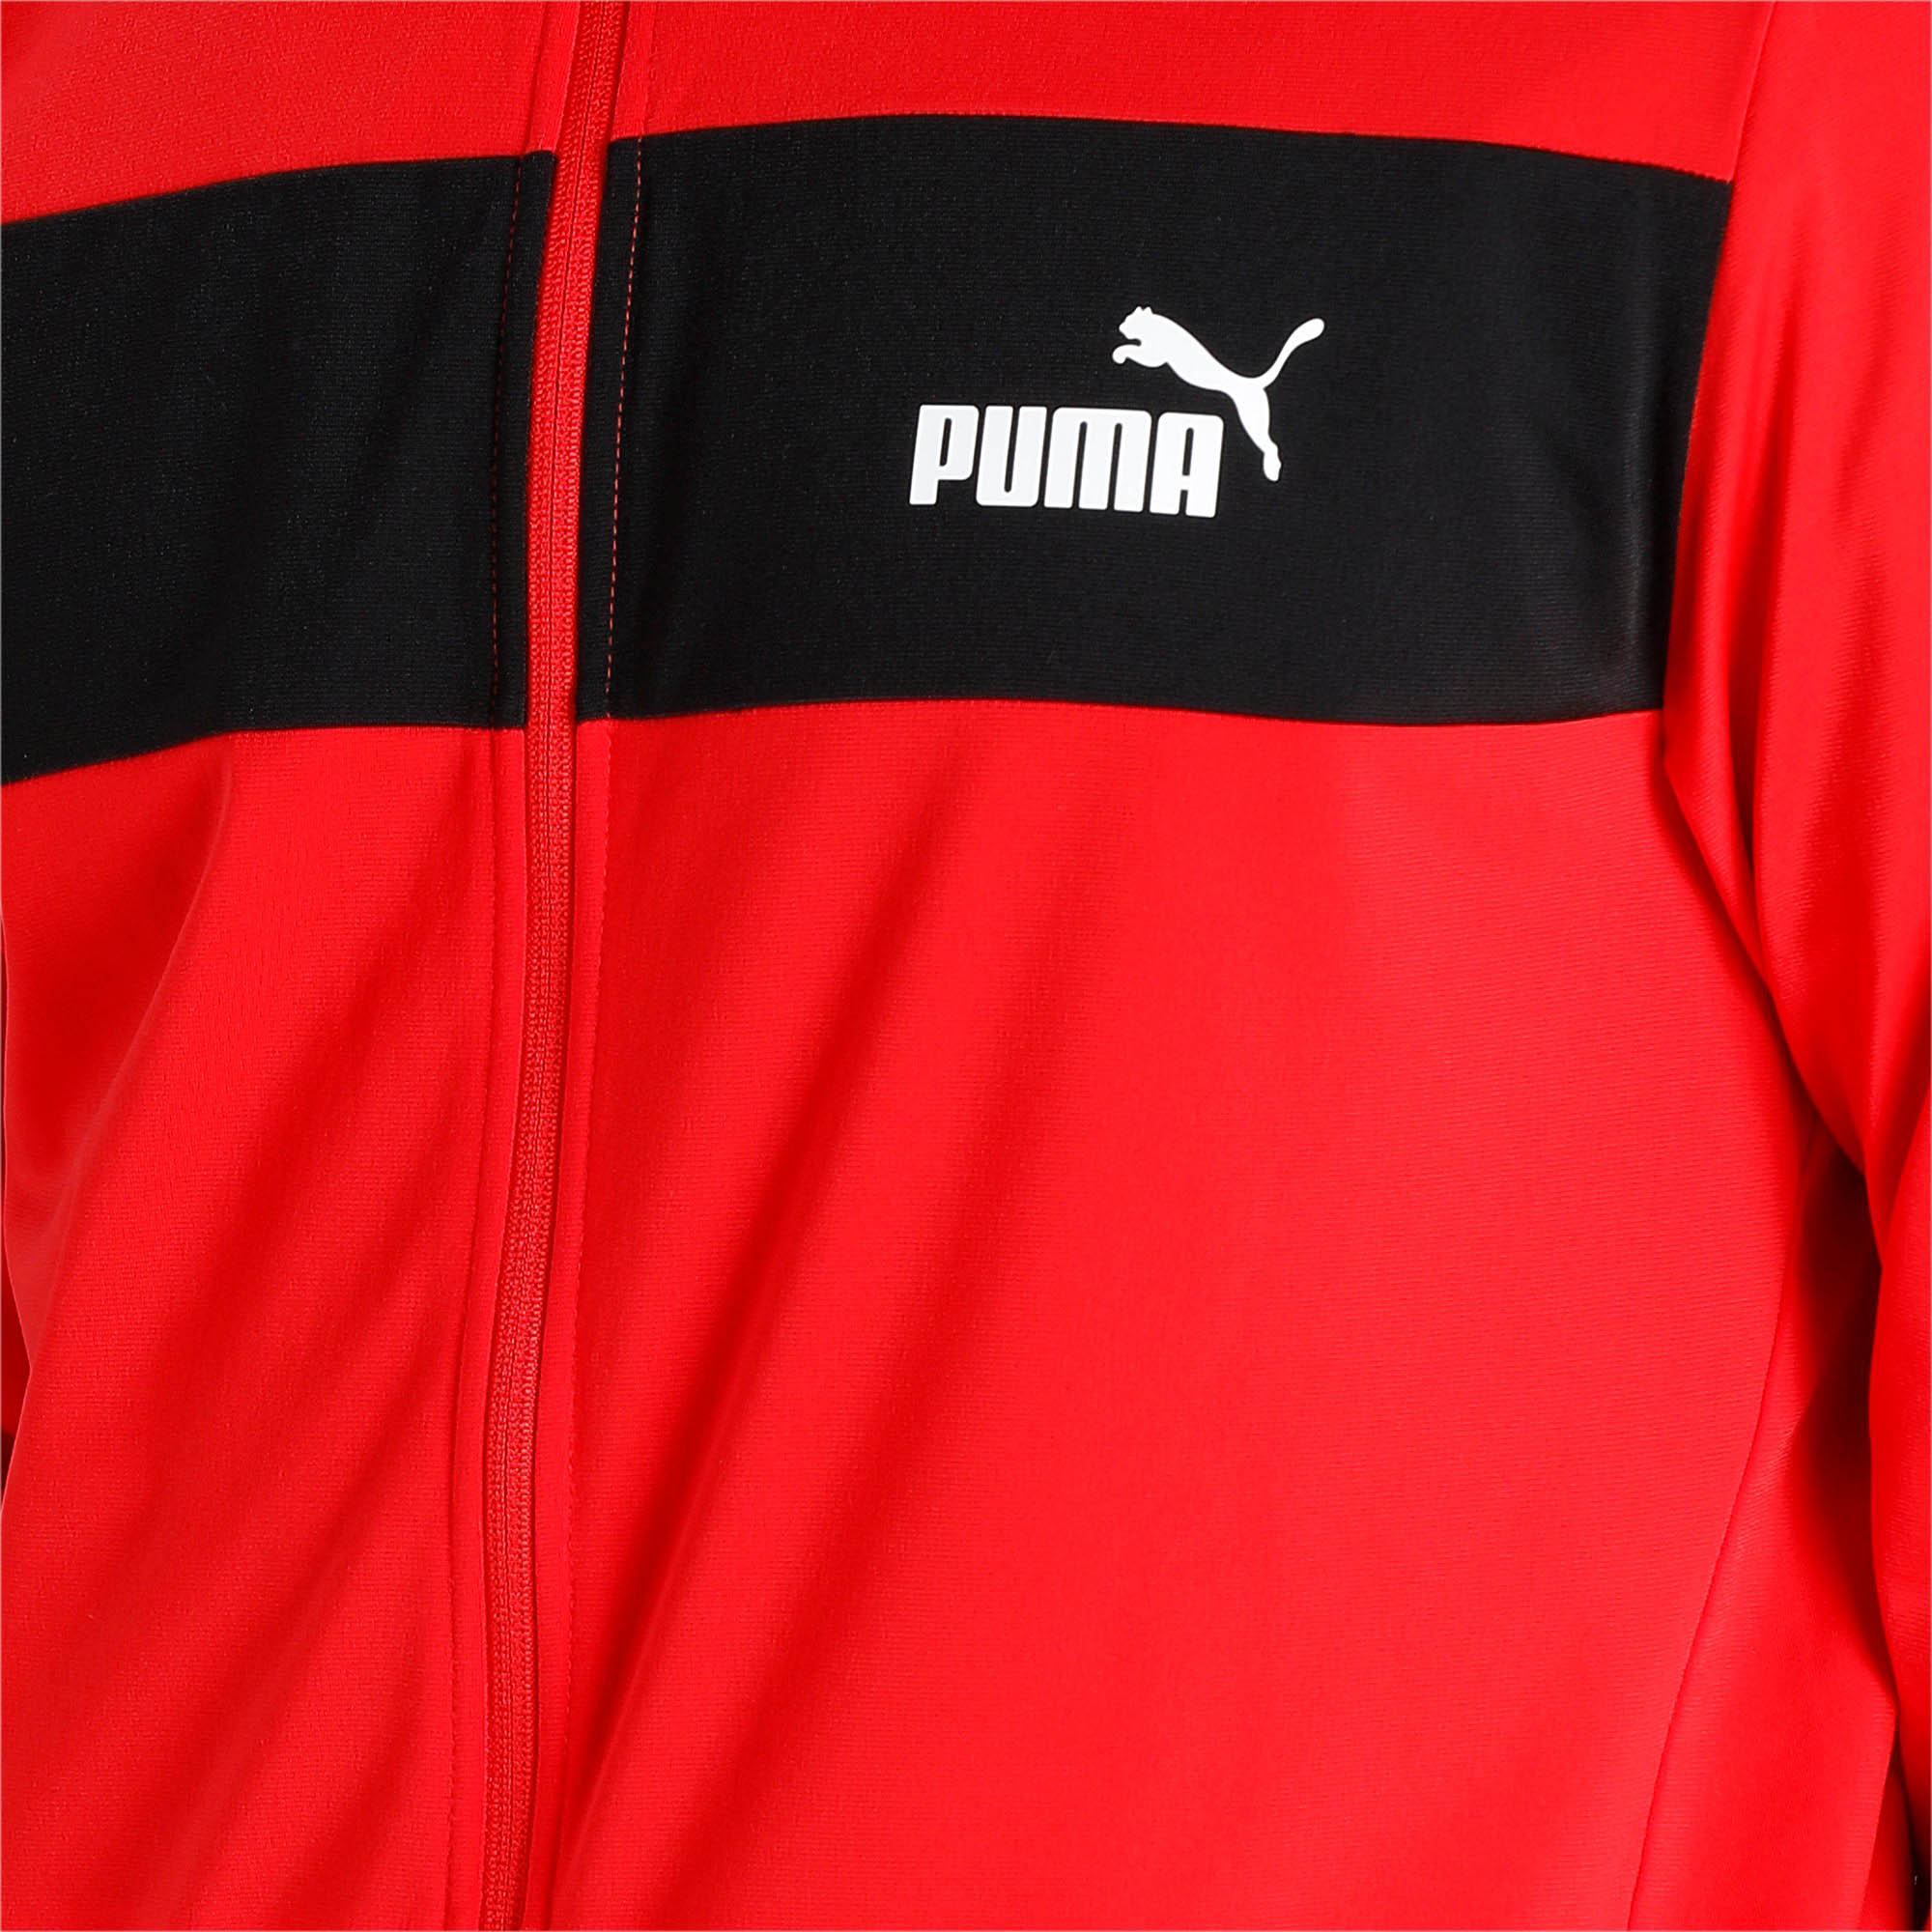 PUMA Herren Poly Suit CL Trainingsanzug Jogginganzug 845844 Rot 